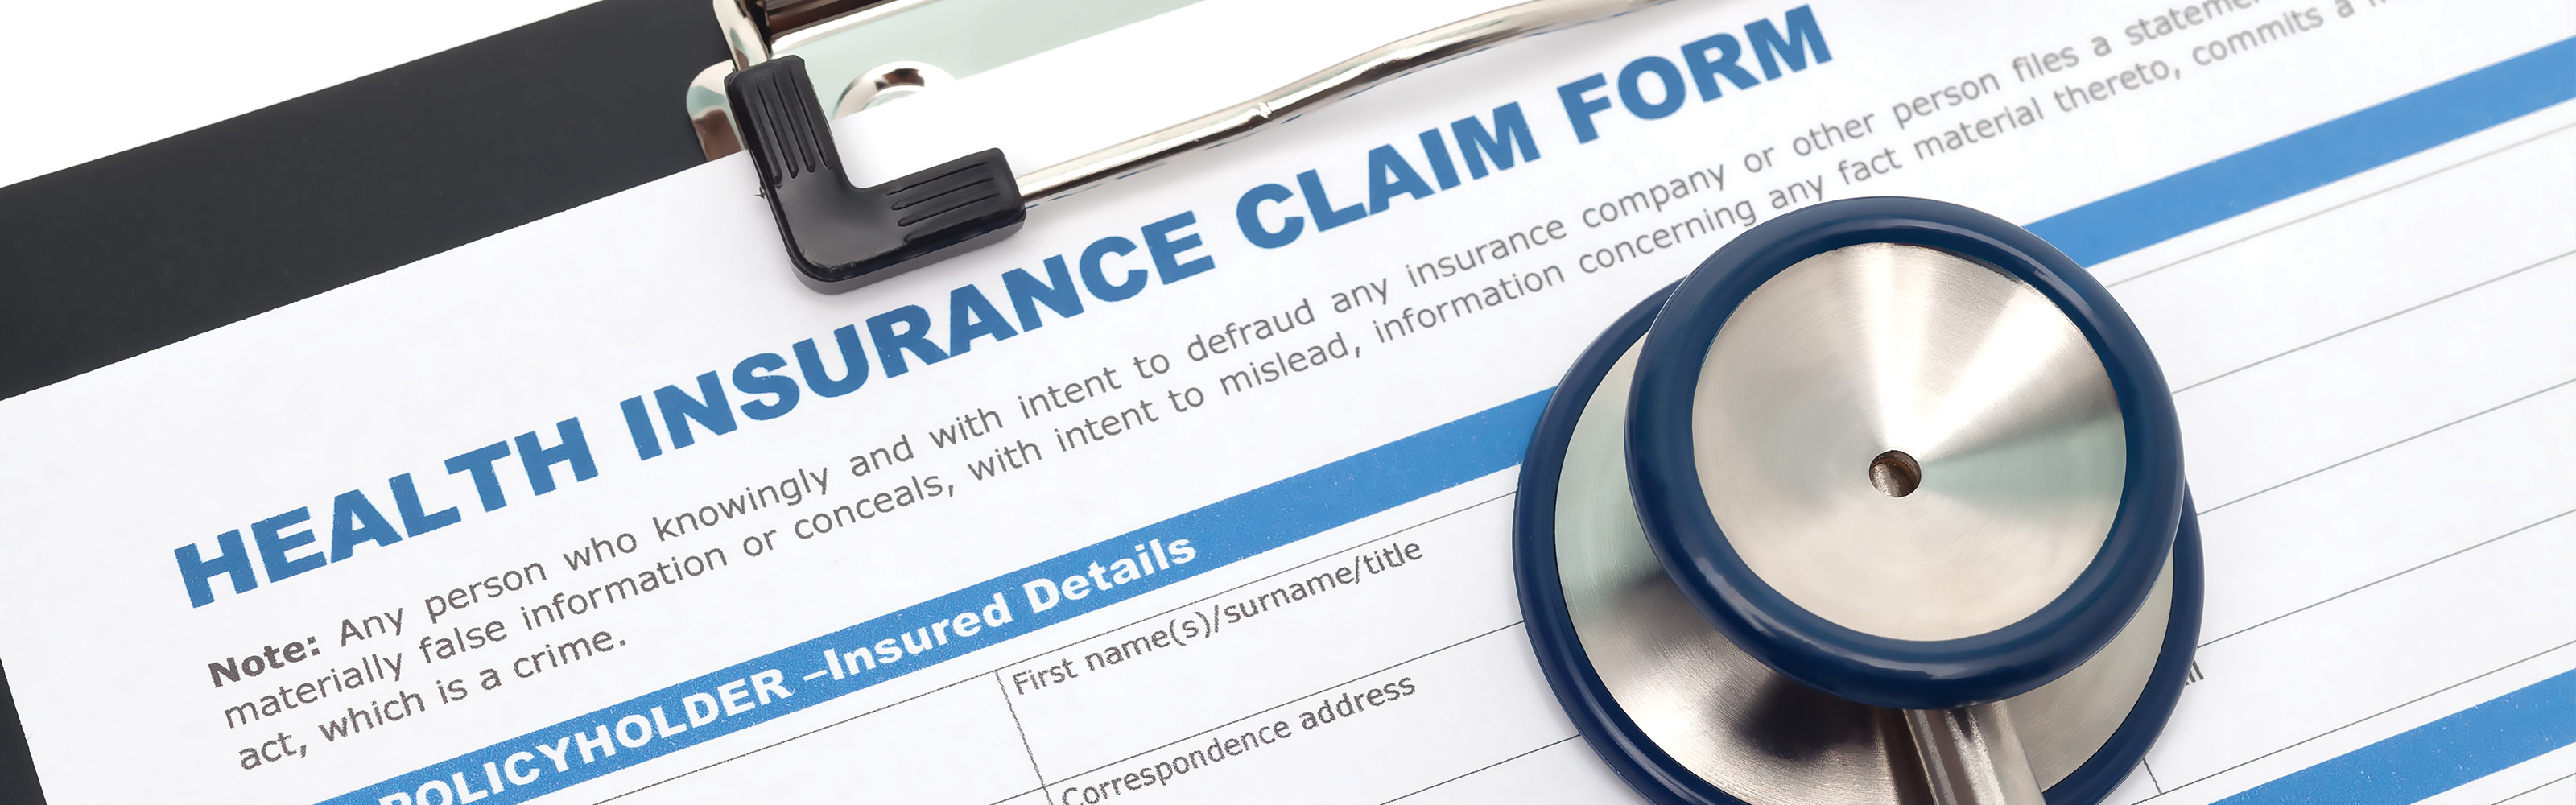 health insurance claim form banner